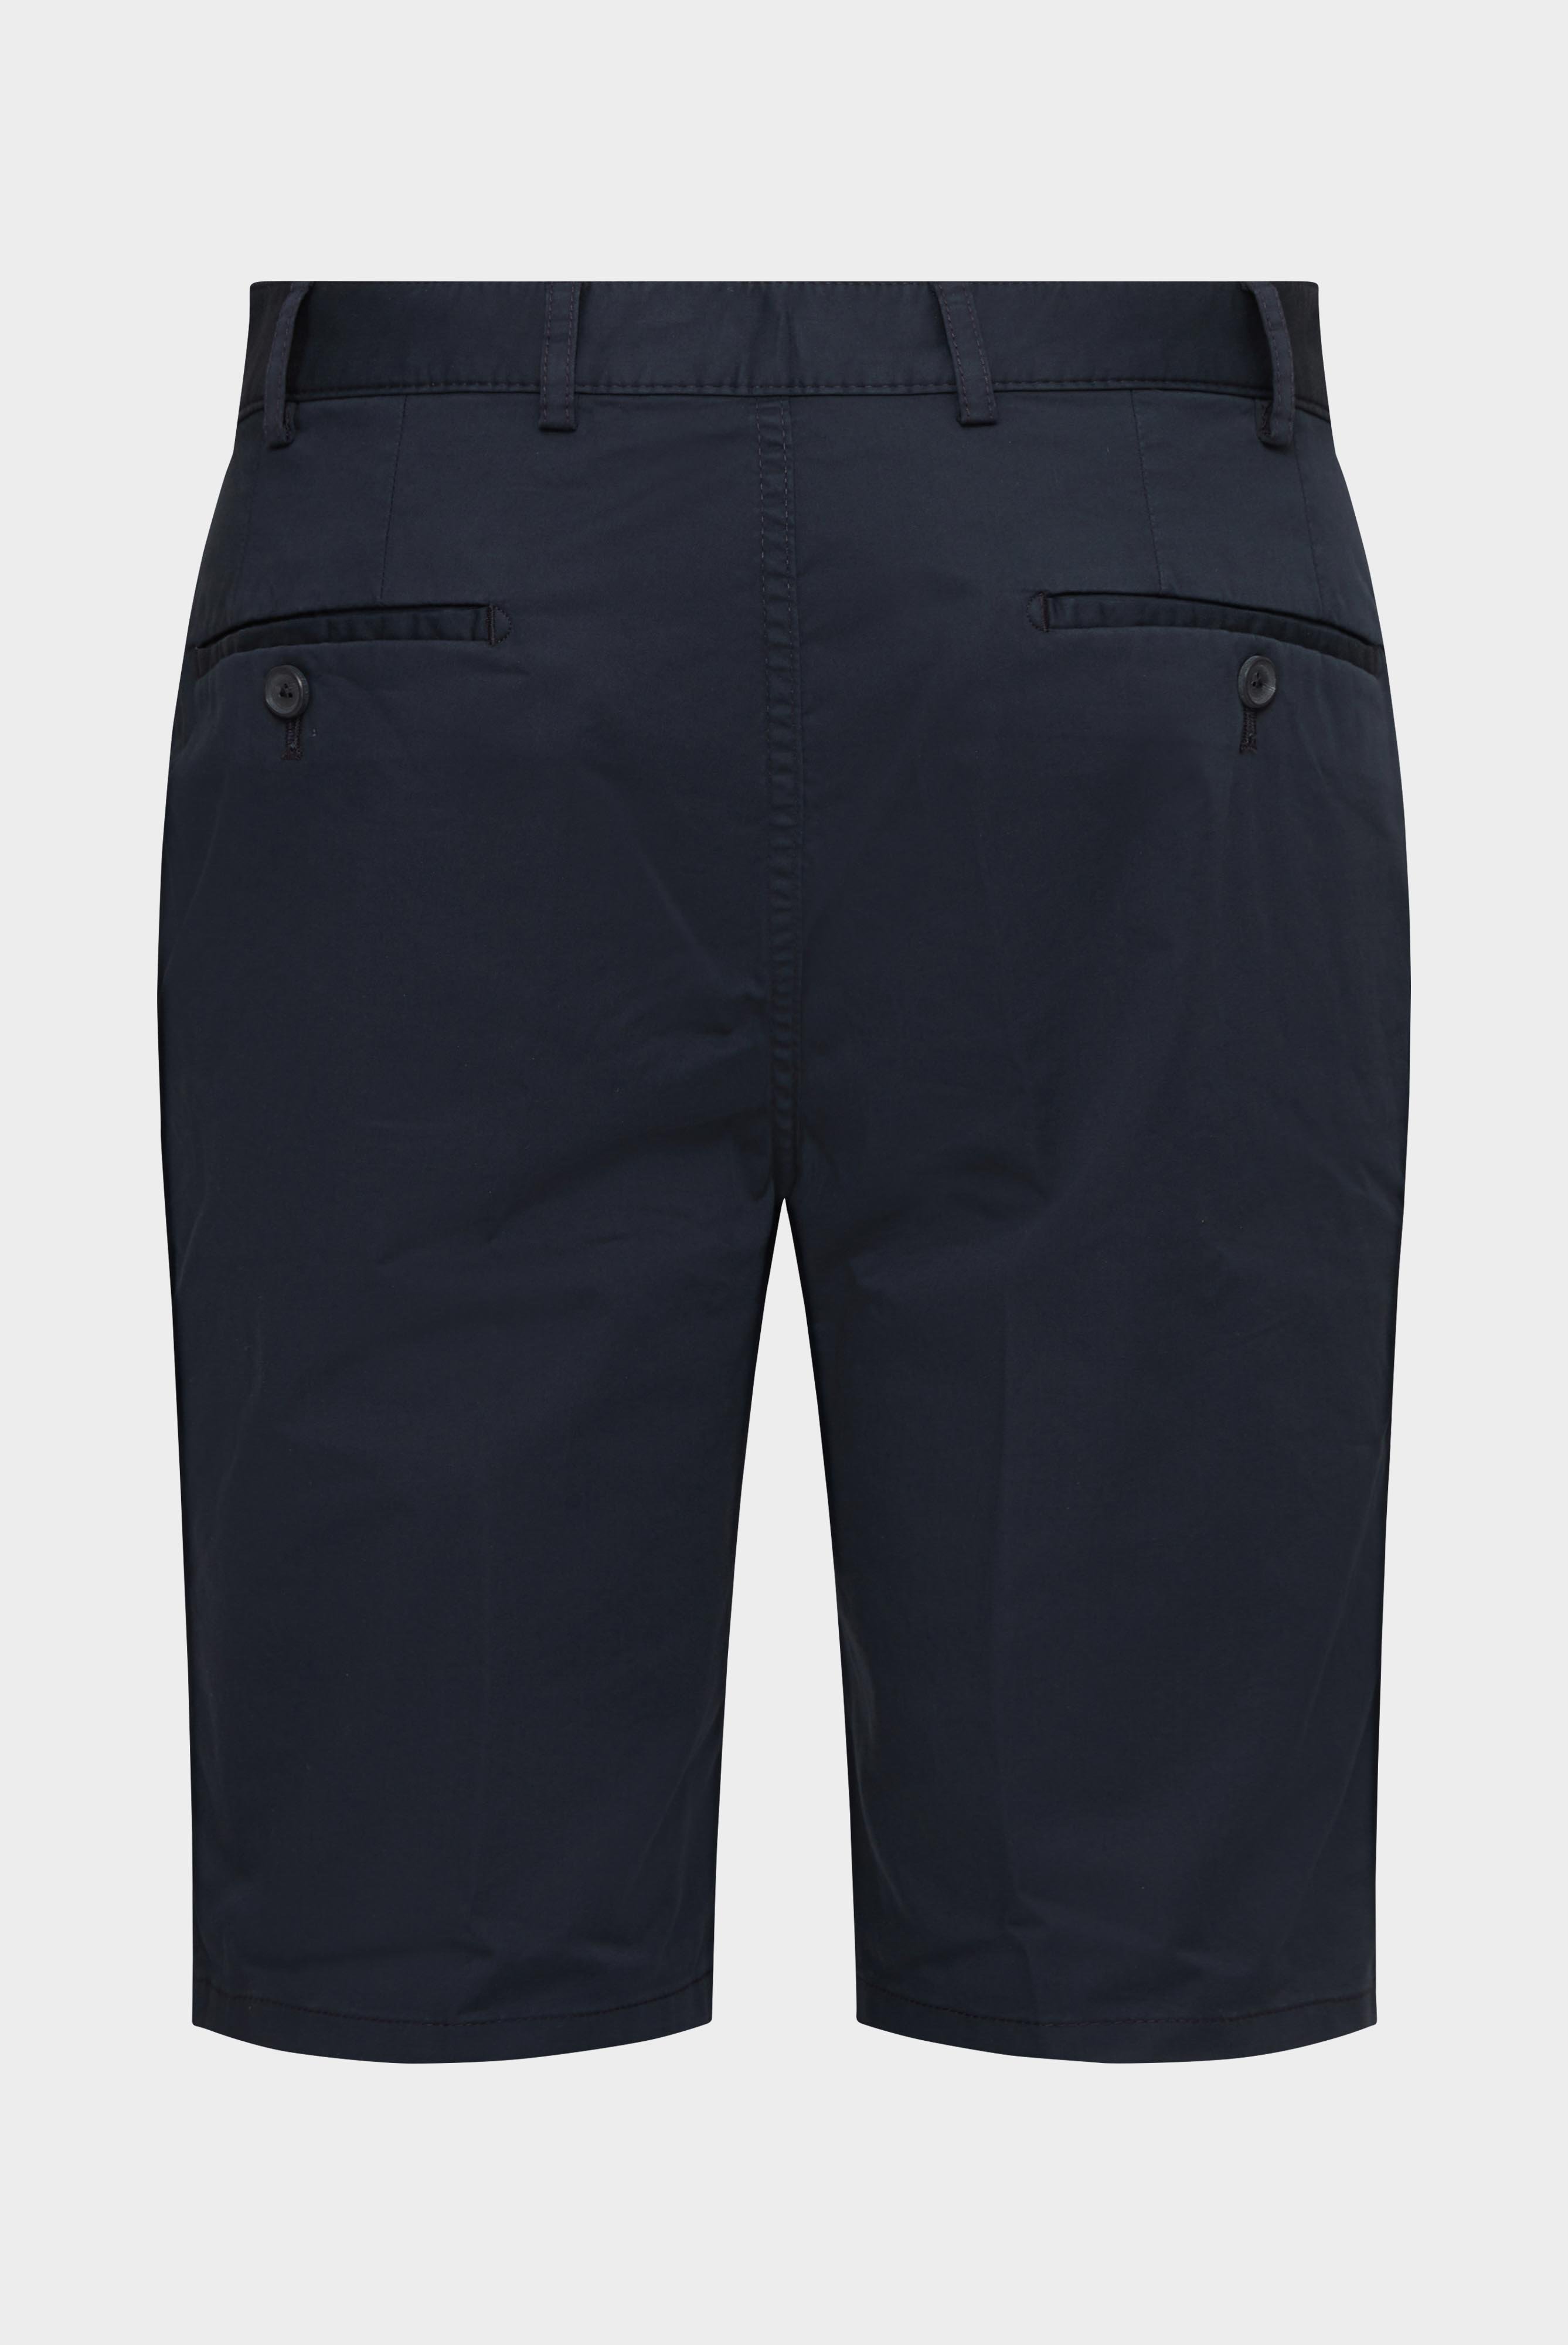 Jeans & Trousers+Men''s Bermuda shorts+80.5974..J00151.790.50